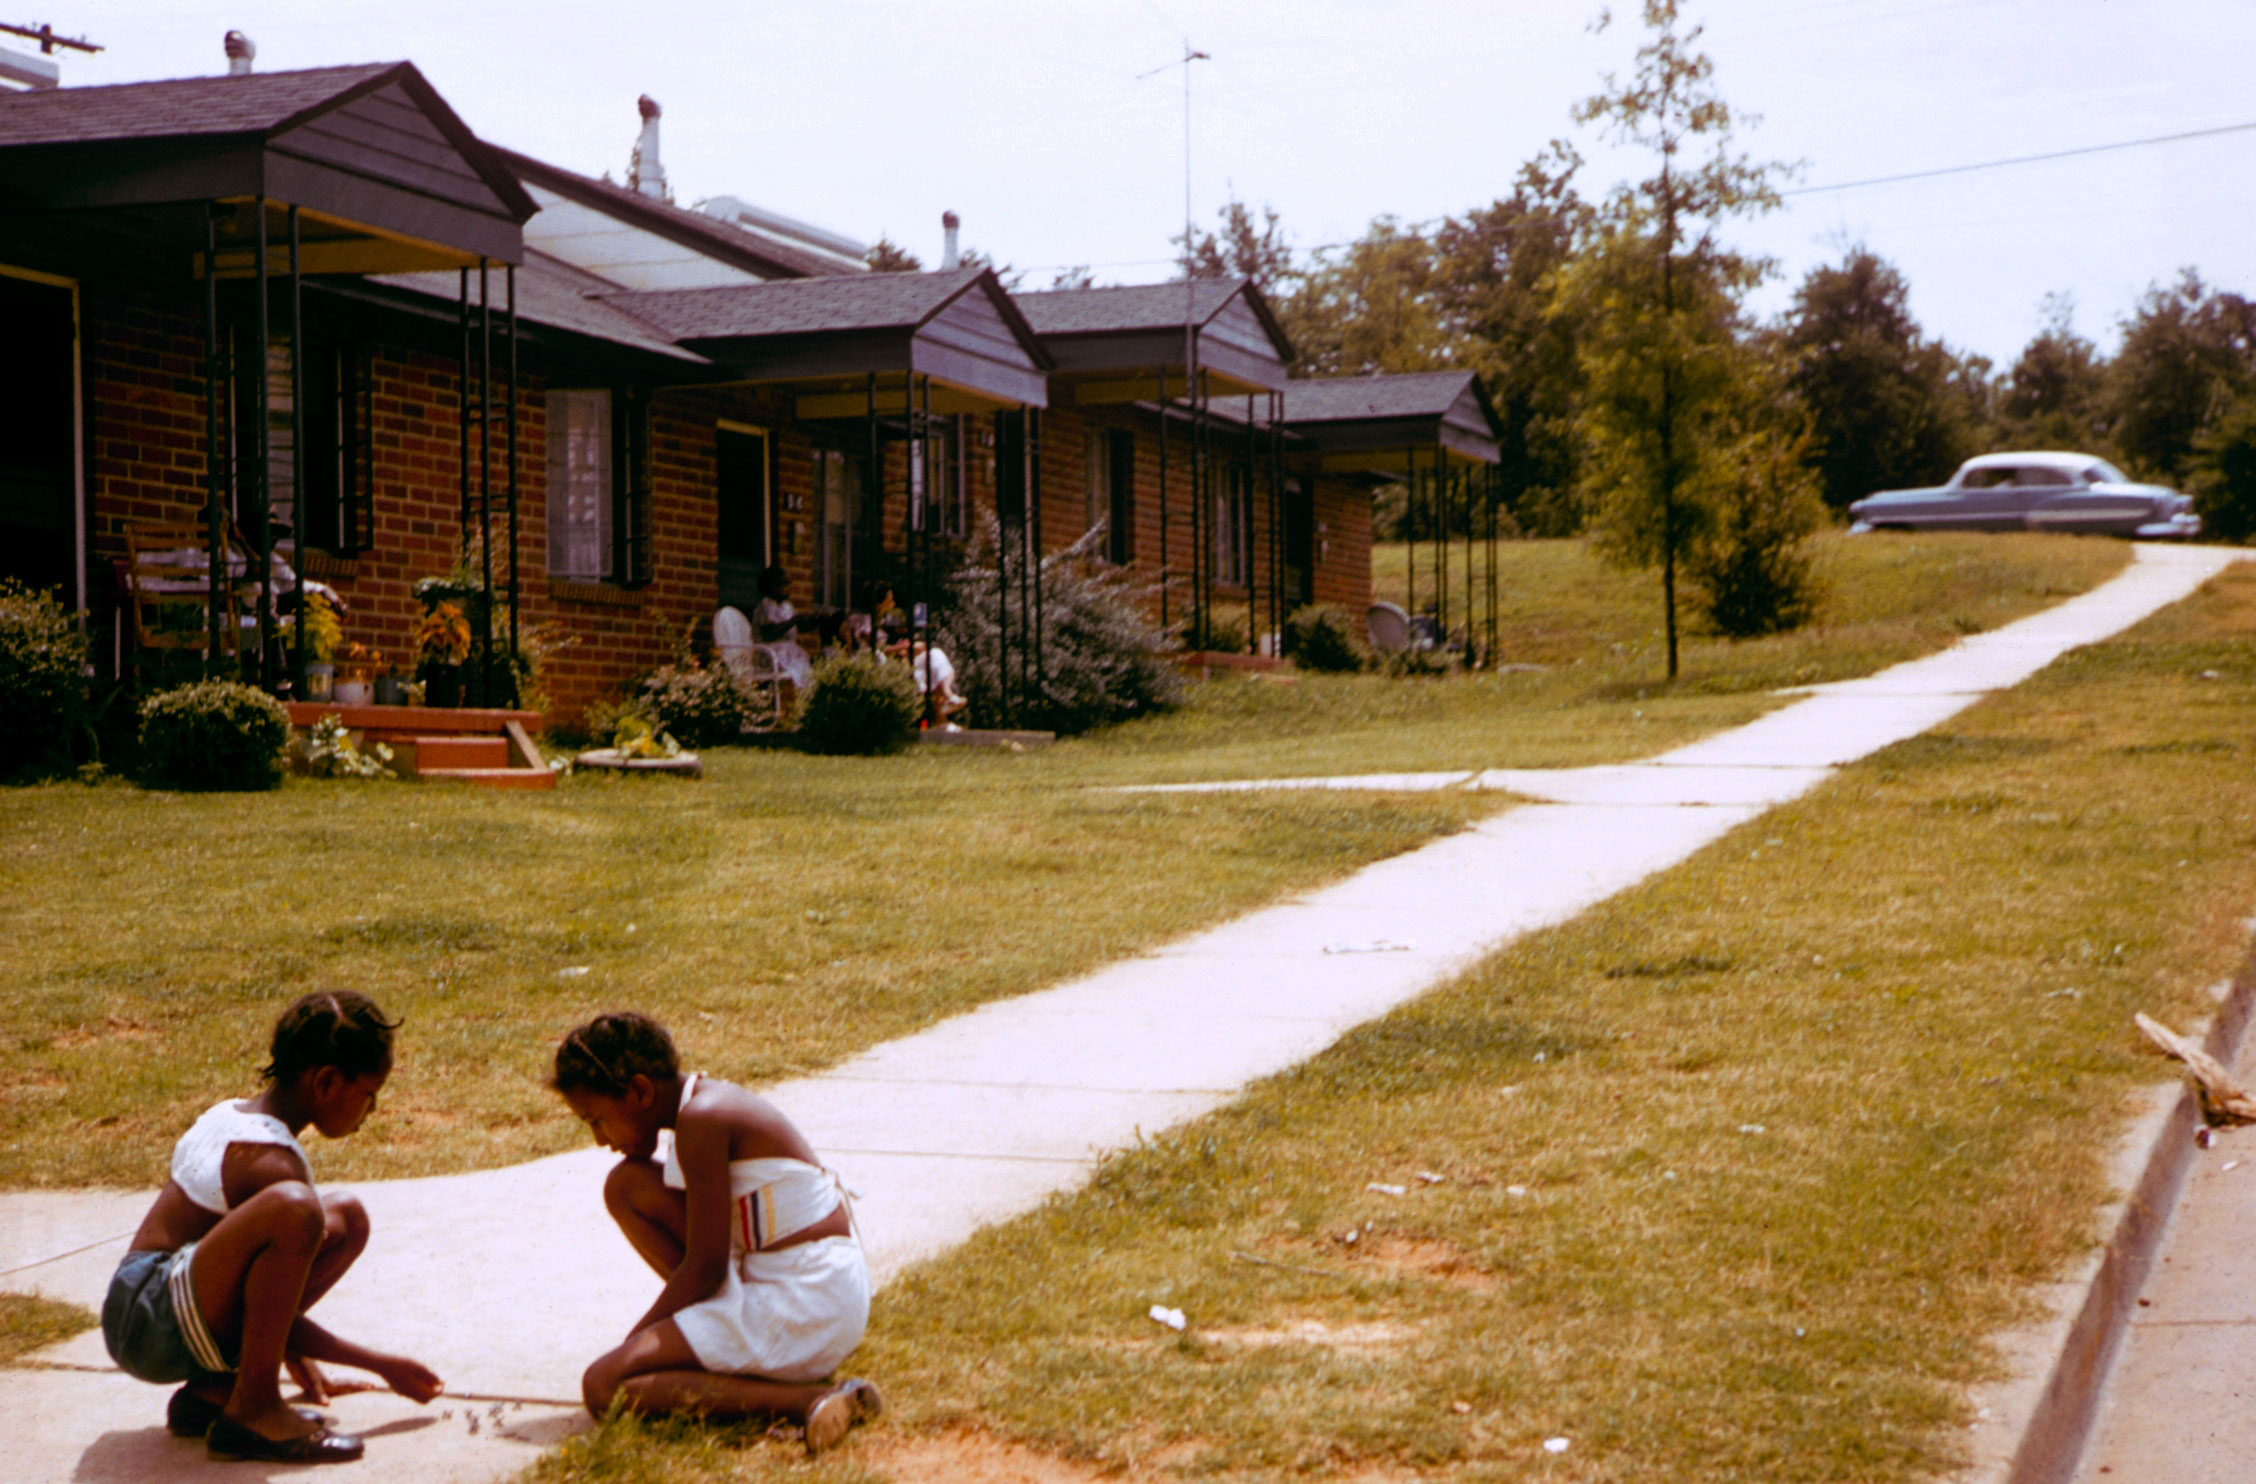 Children play in a segregated neighborhood, Greenville, South Carolina, 1956.